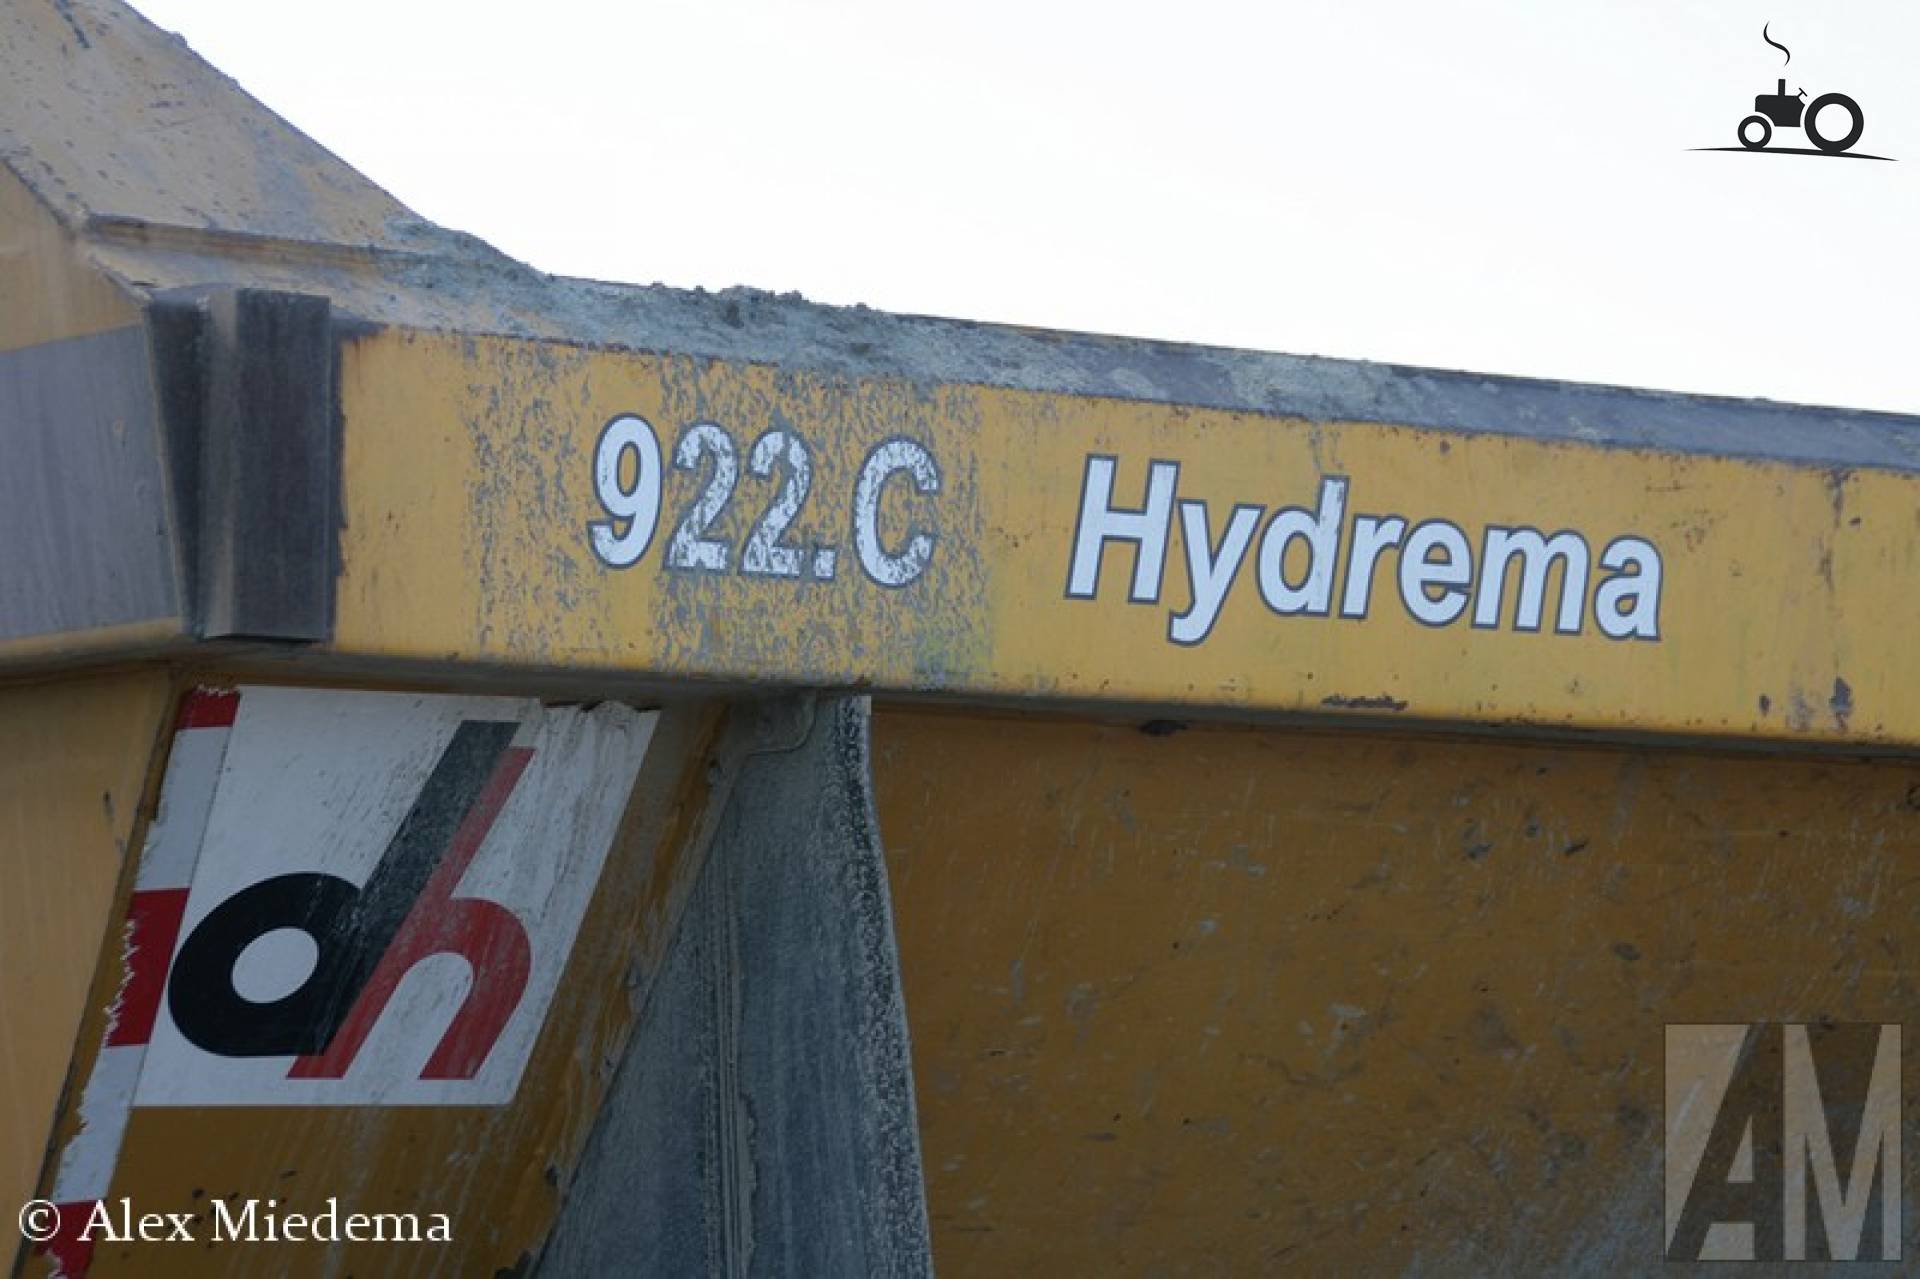 Hydrema 922C